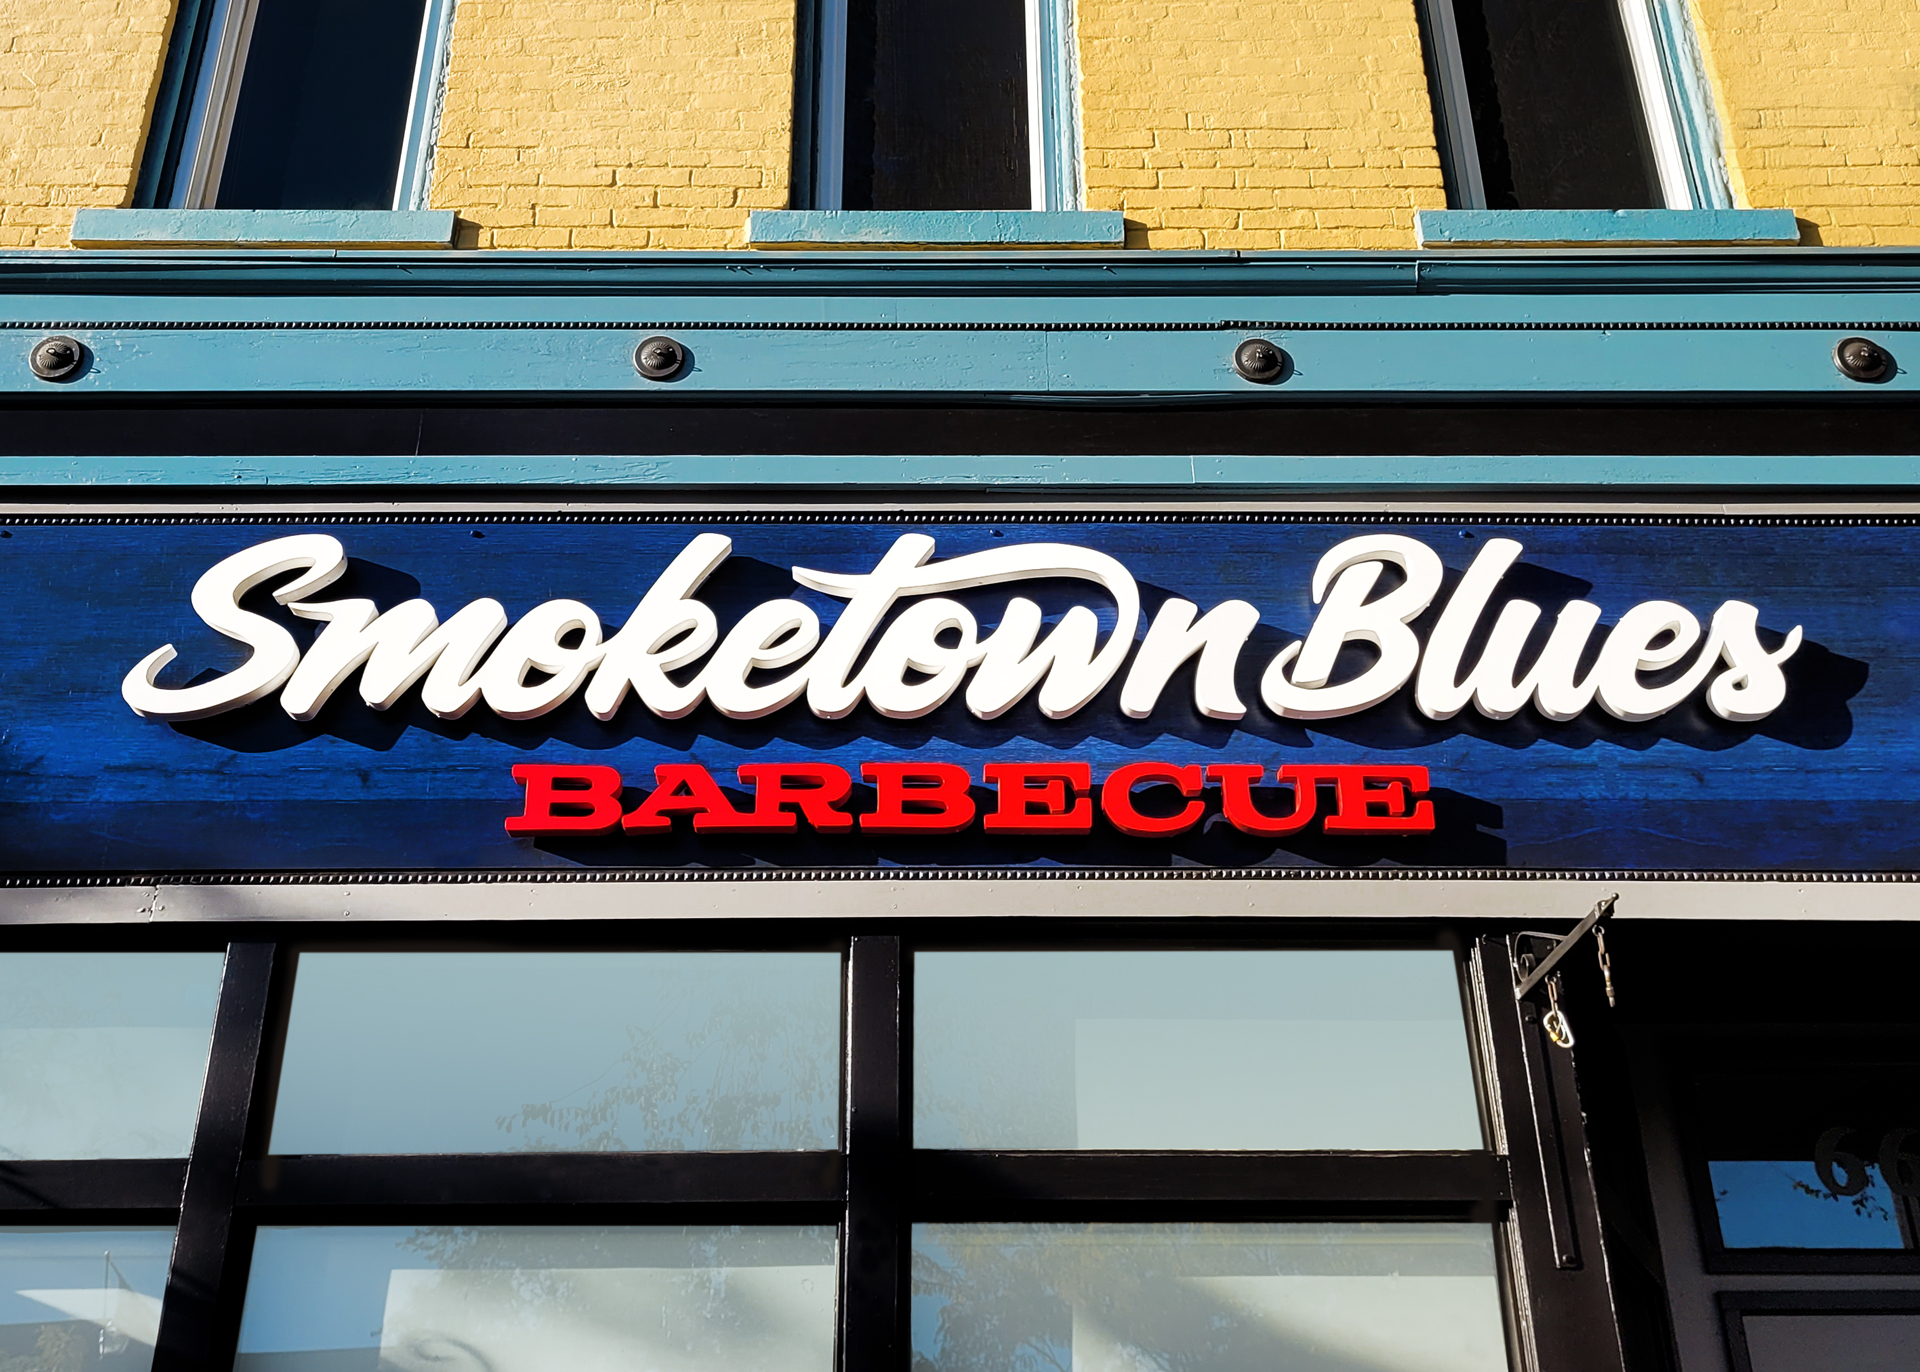 Smoketown Blues BBQ building sign logo